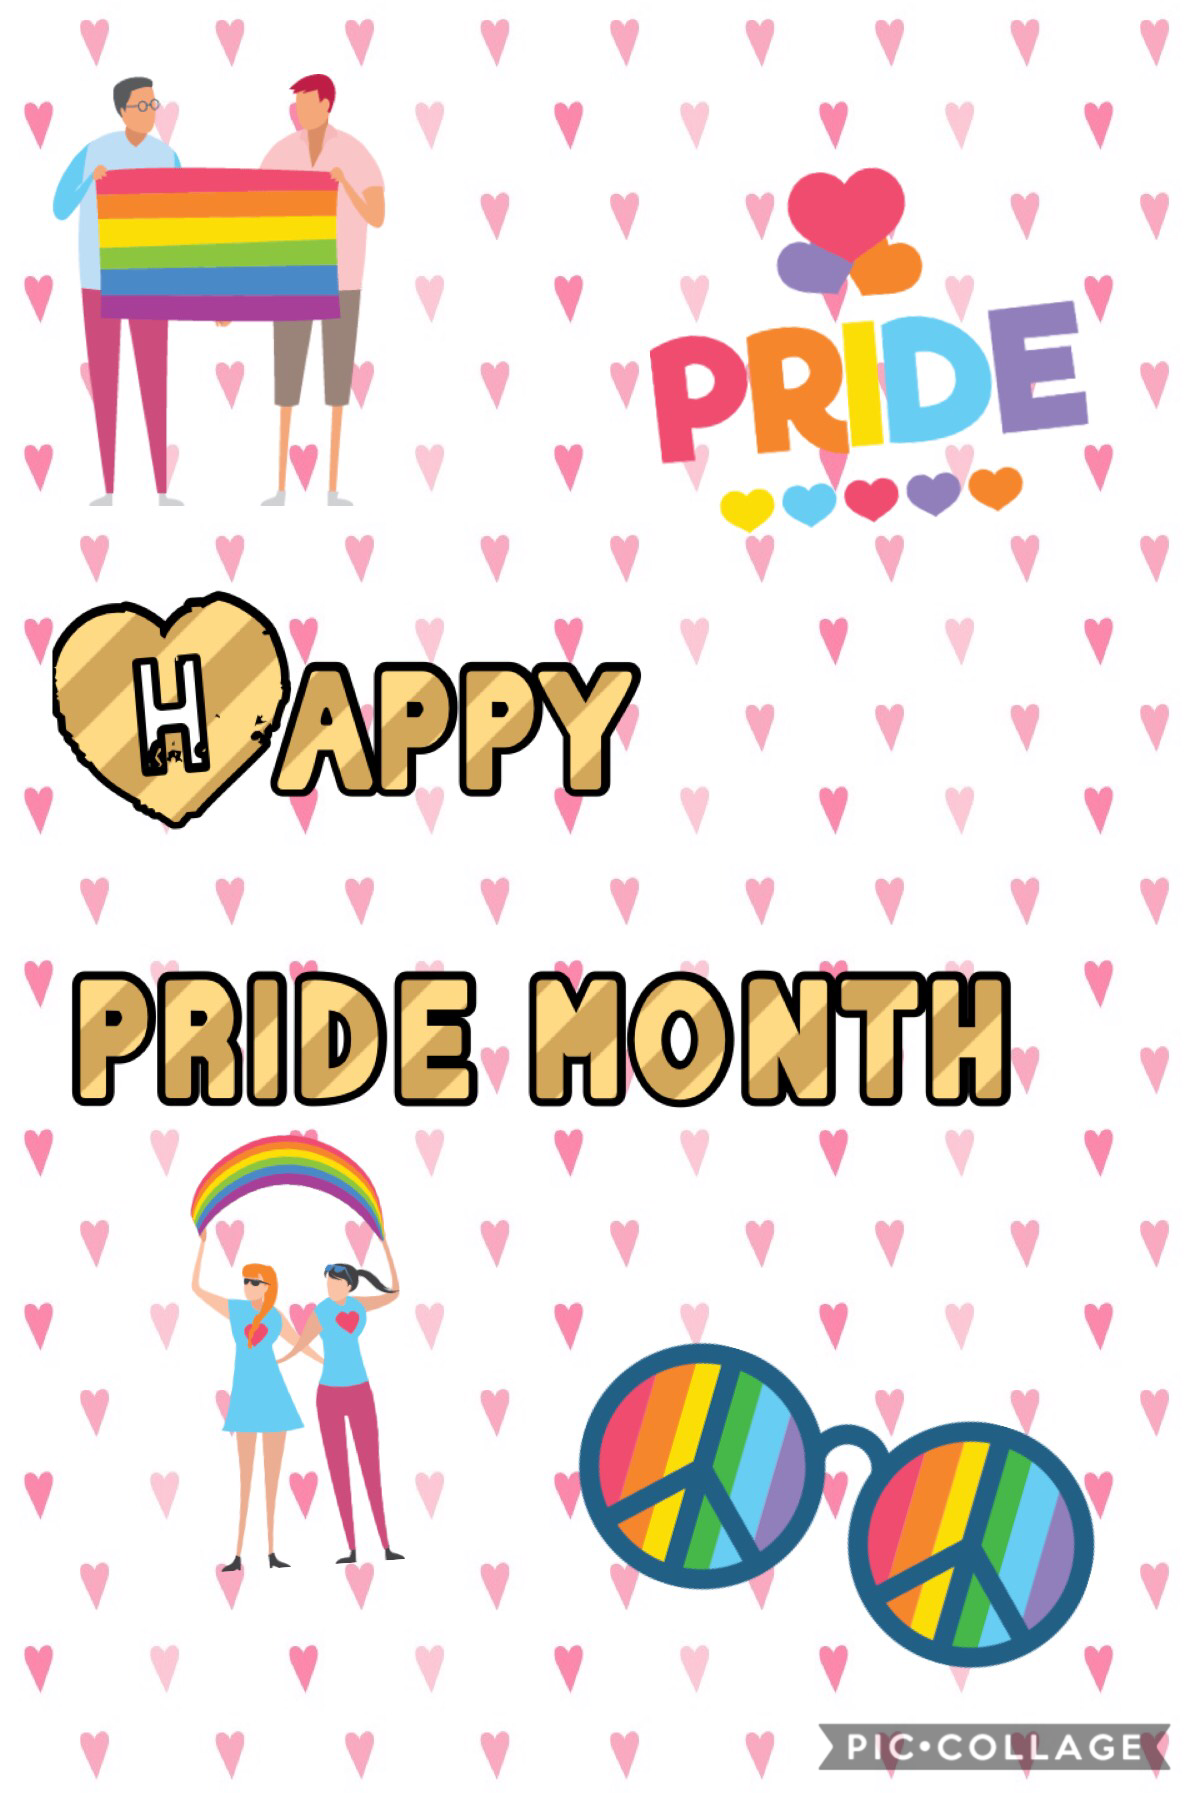 Happy pride month 🏳️‍🌈